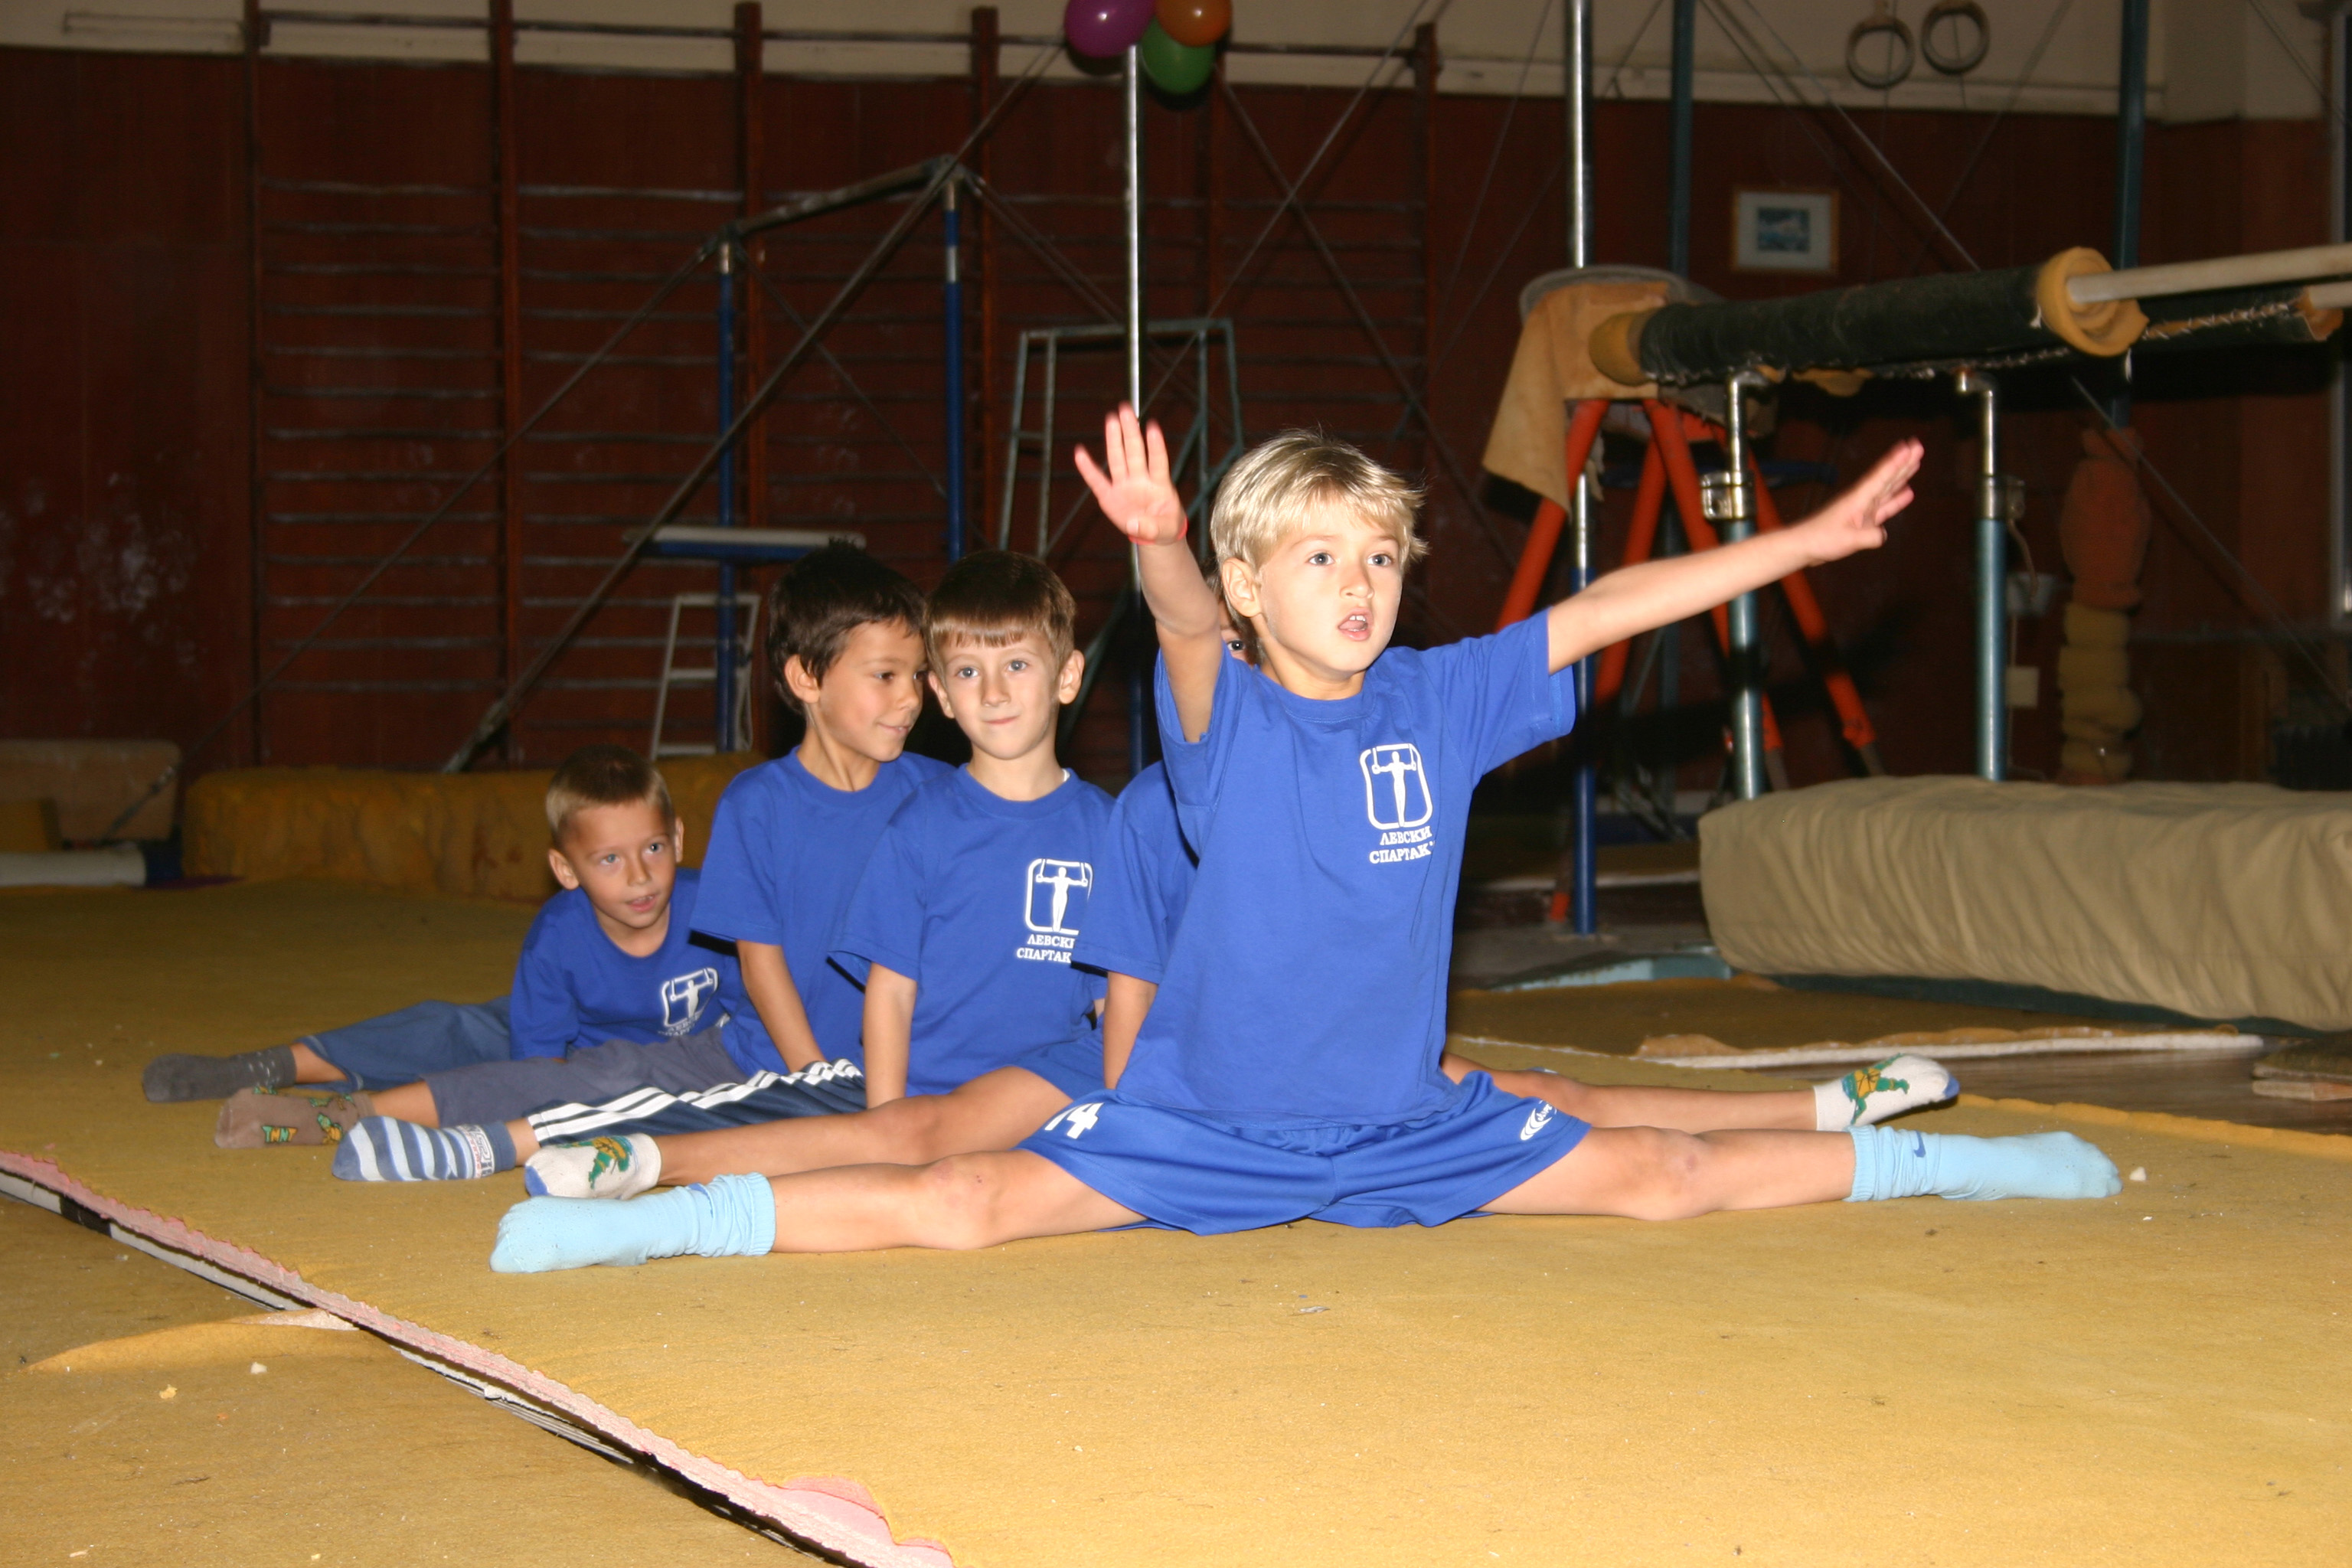 Artistic Gymnastics for Children - Flexibility